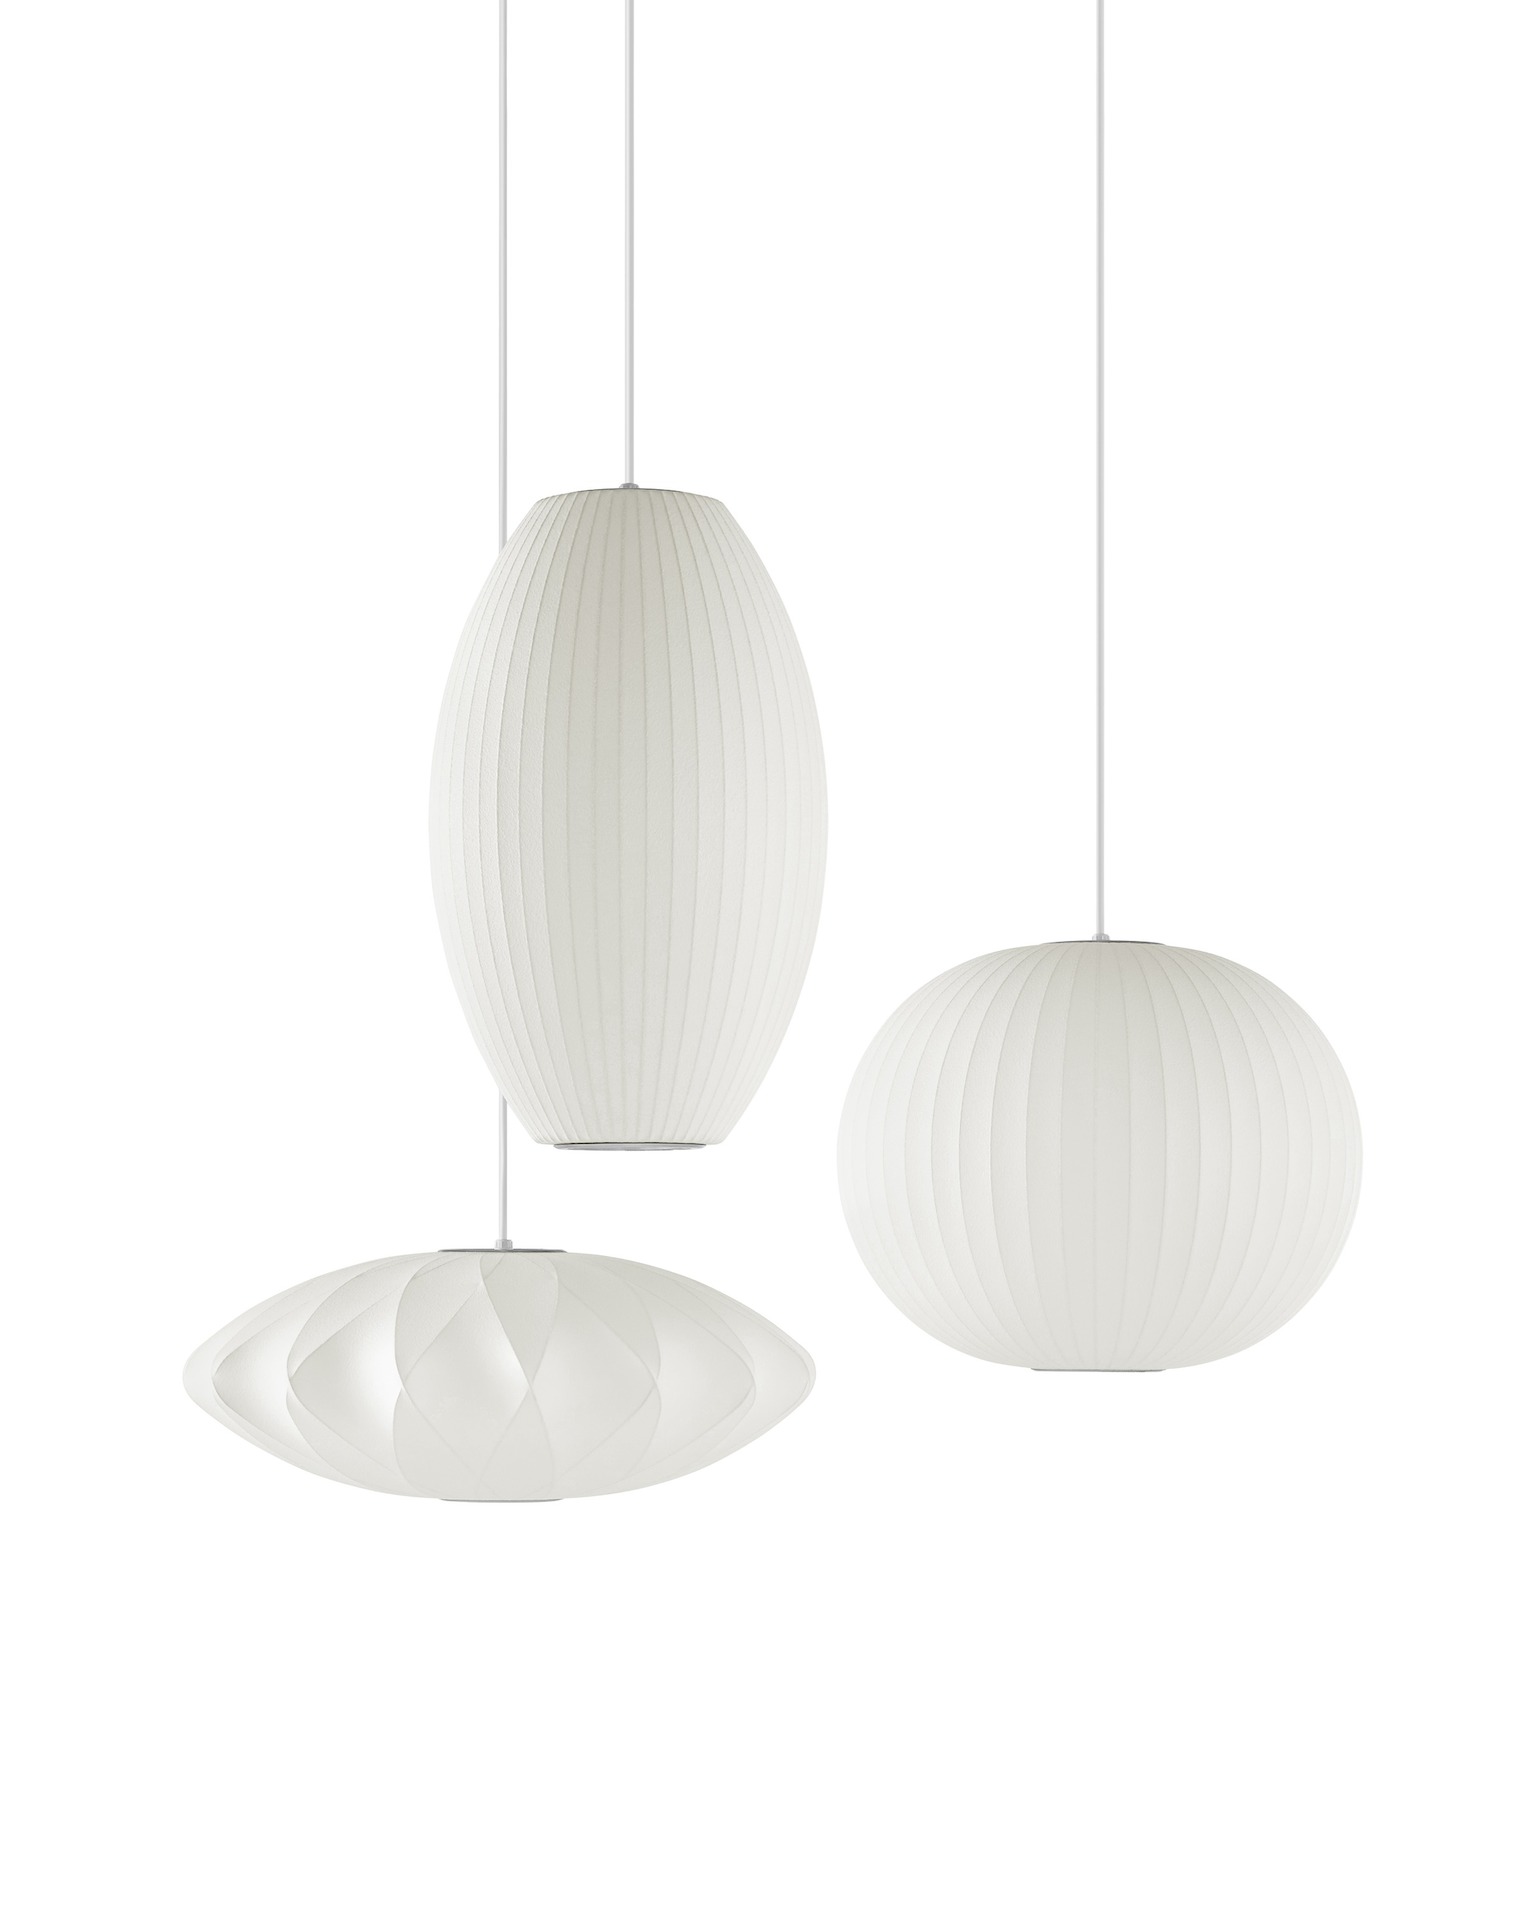 Nelson Triple Bubble Lamp Fixture Product Images - Accent Lighting